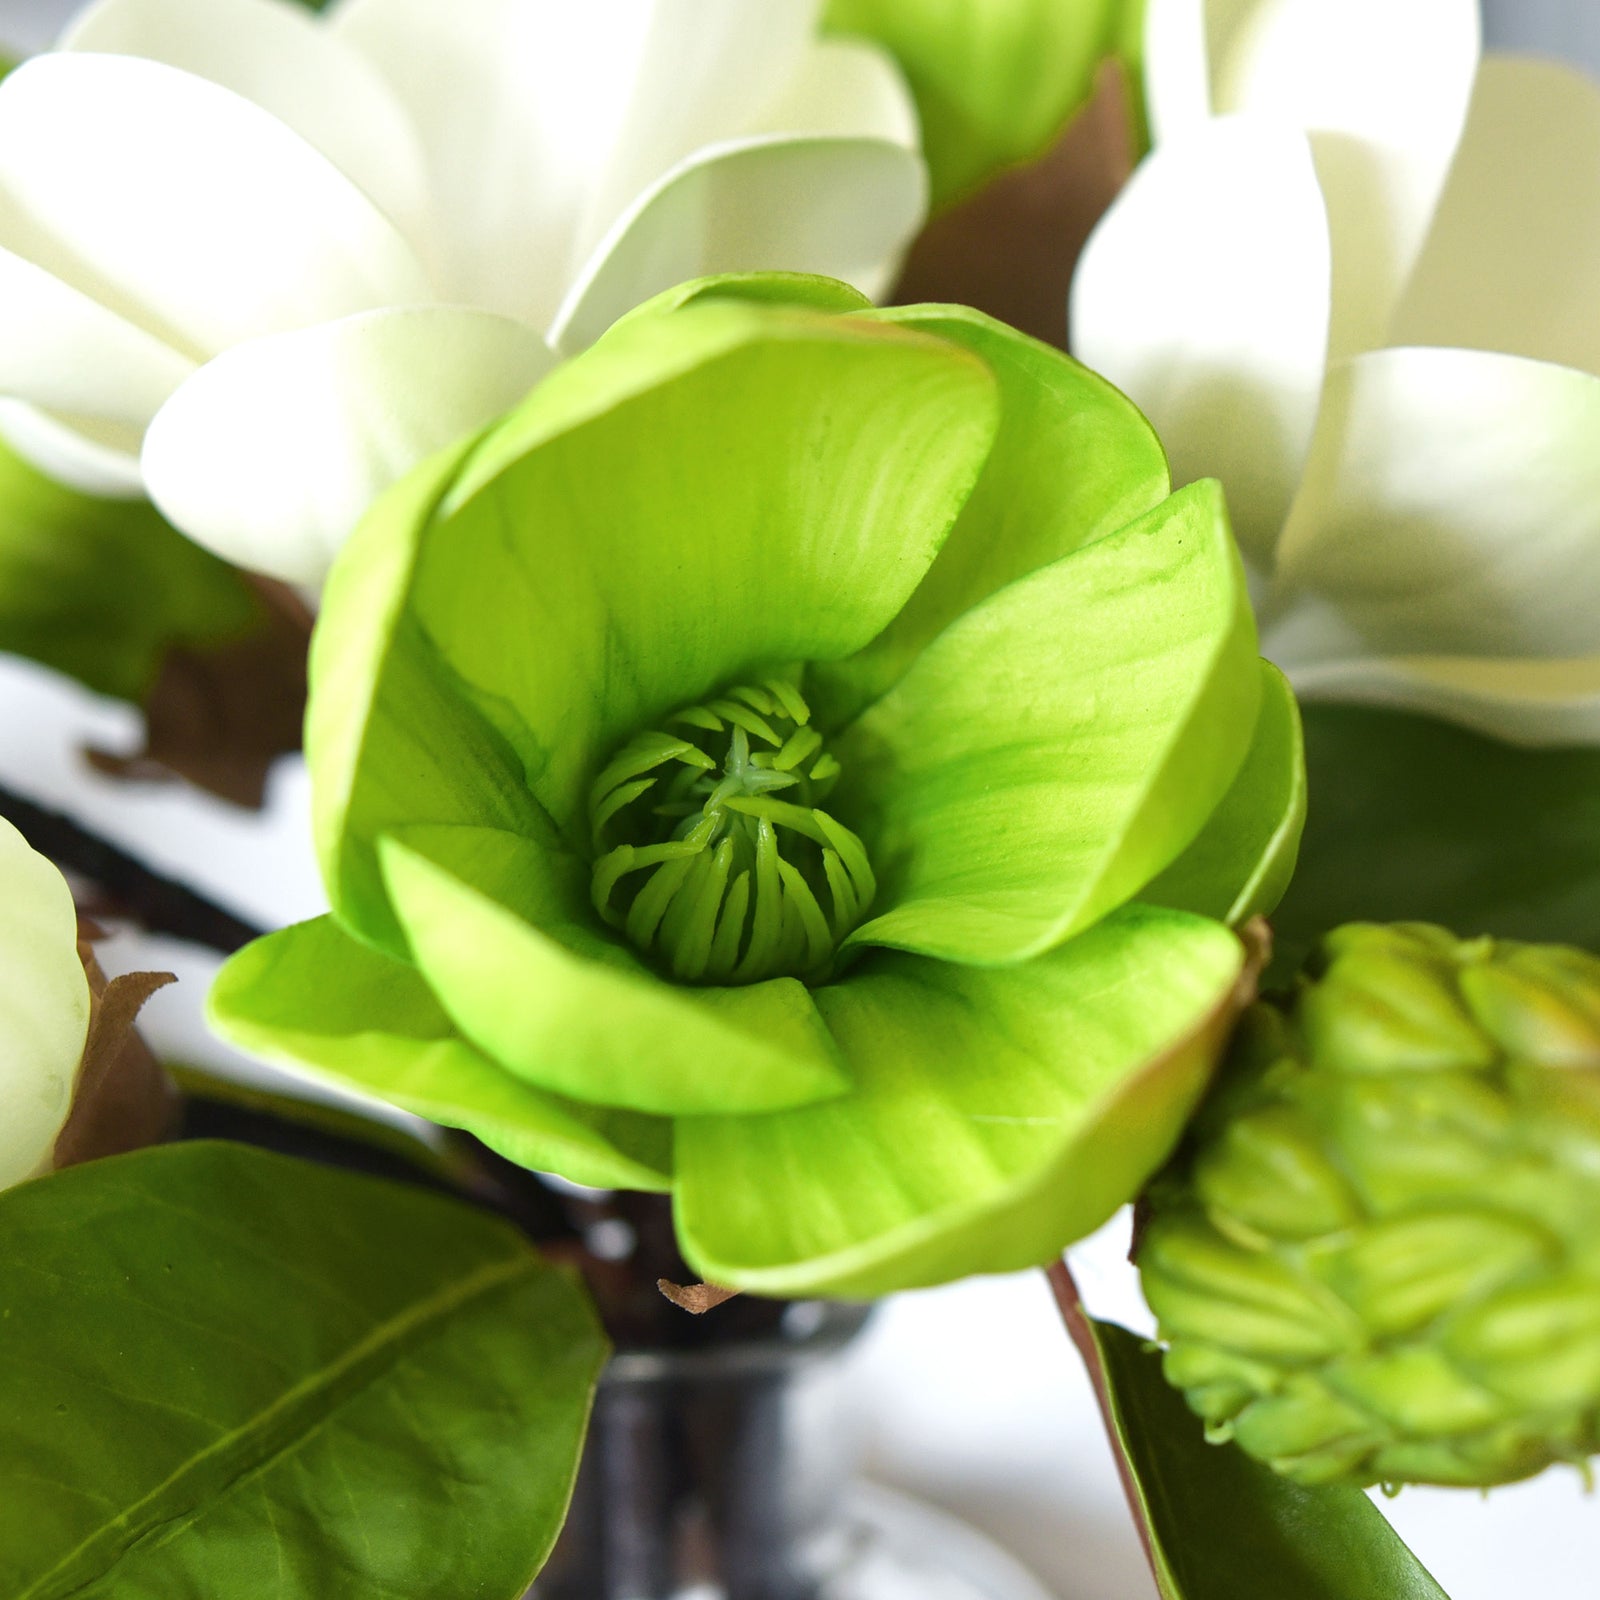 FiveSeasonStuff Noble Green Magnolia Artificial Flowers Arrangement with 4 Stems, Wedding Bridesmaids Bouquet Bridal Showers Home Decor